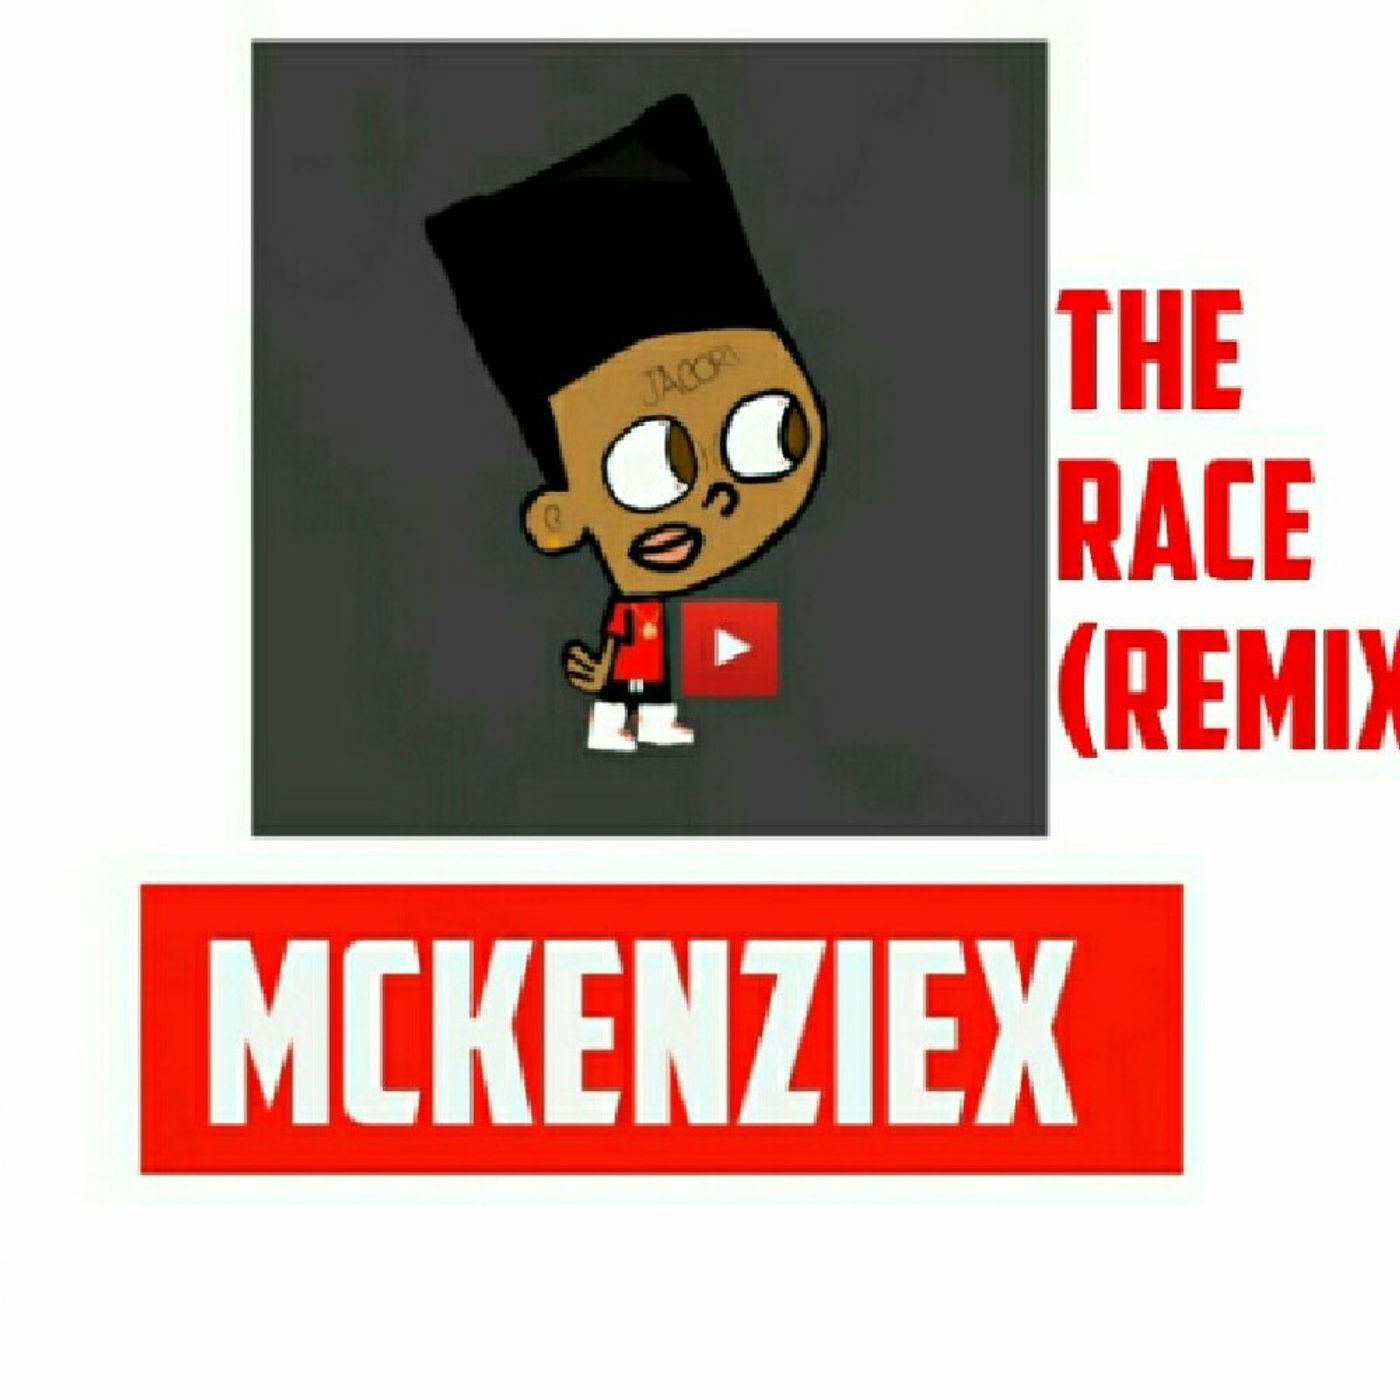 THE RACE (REMIX)